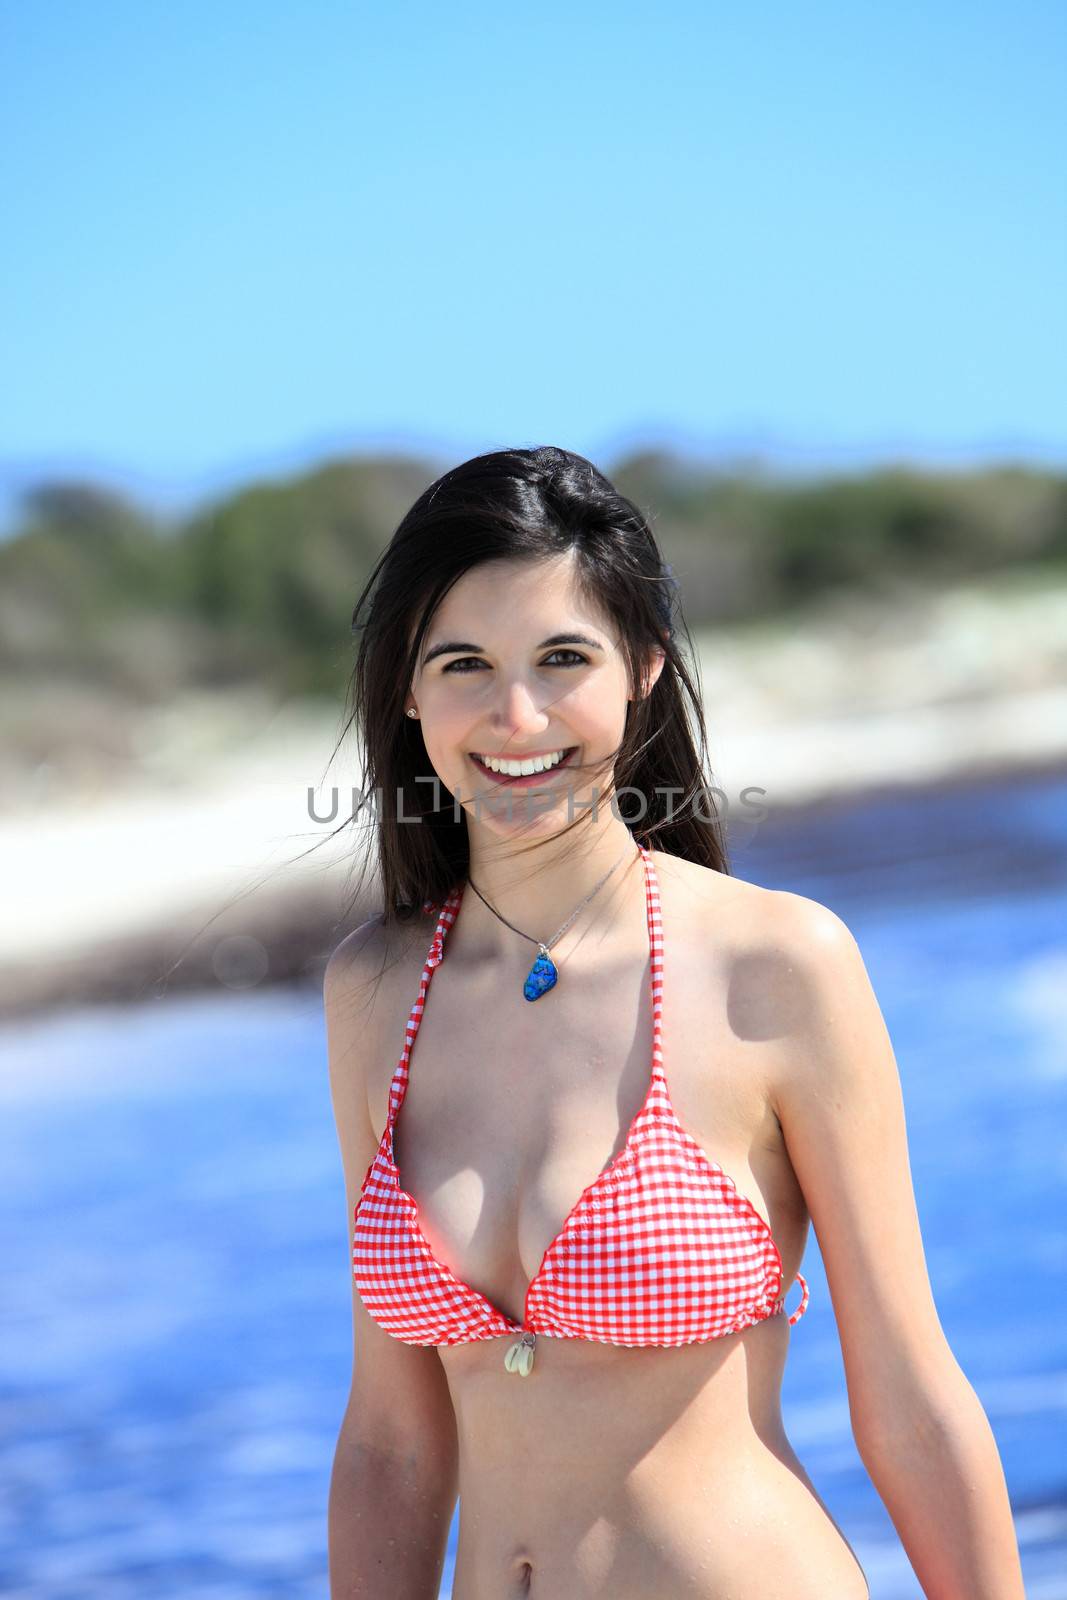 Joyful young woman at the beach by Farina6000